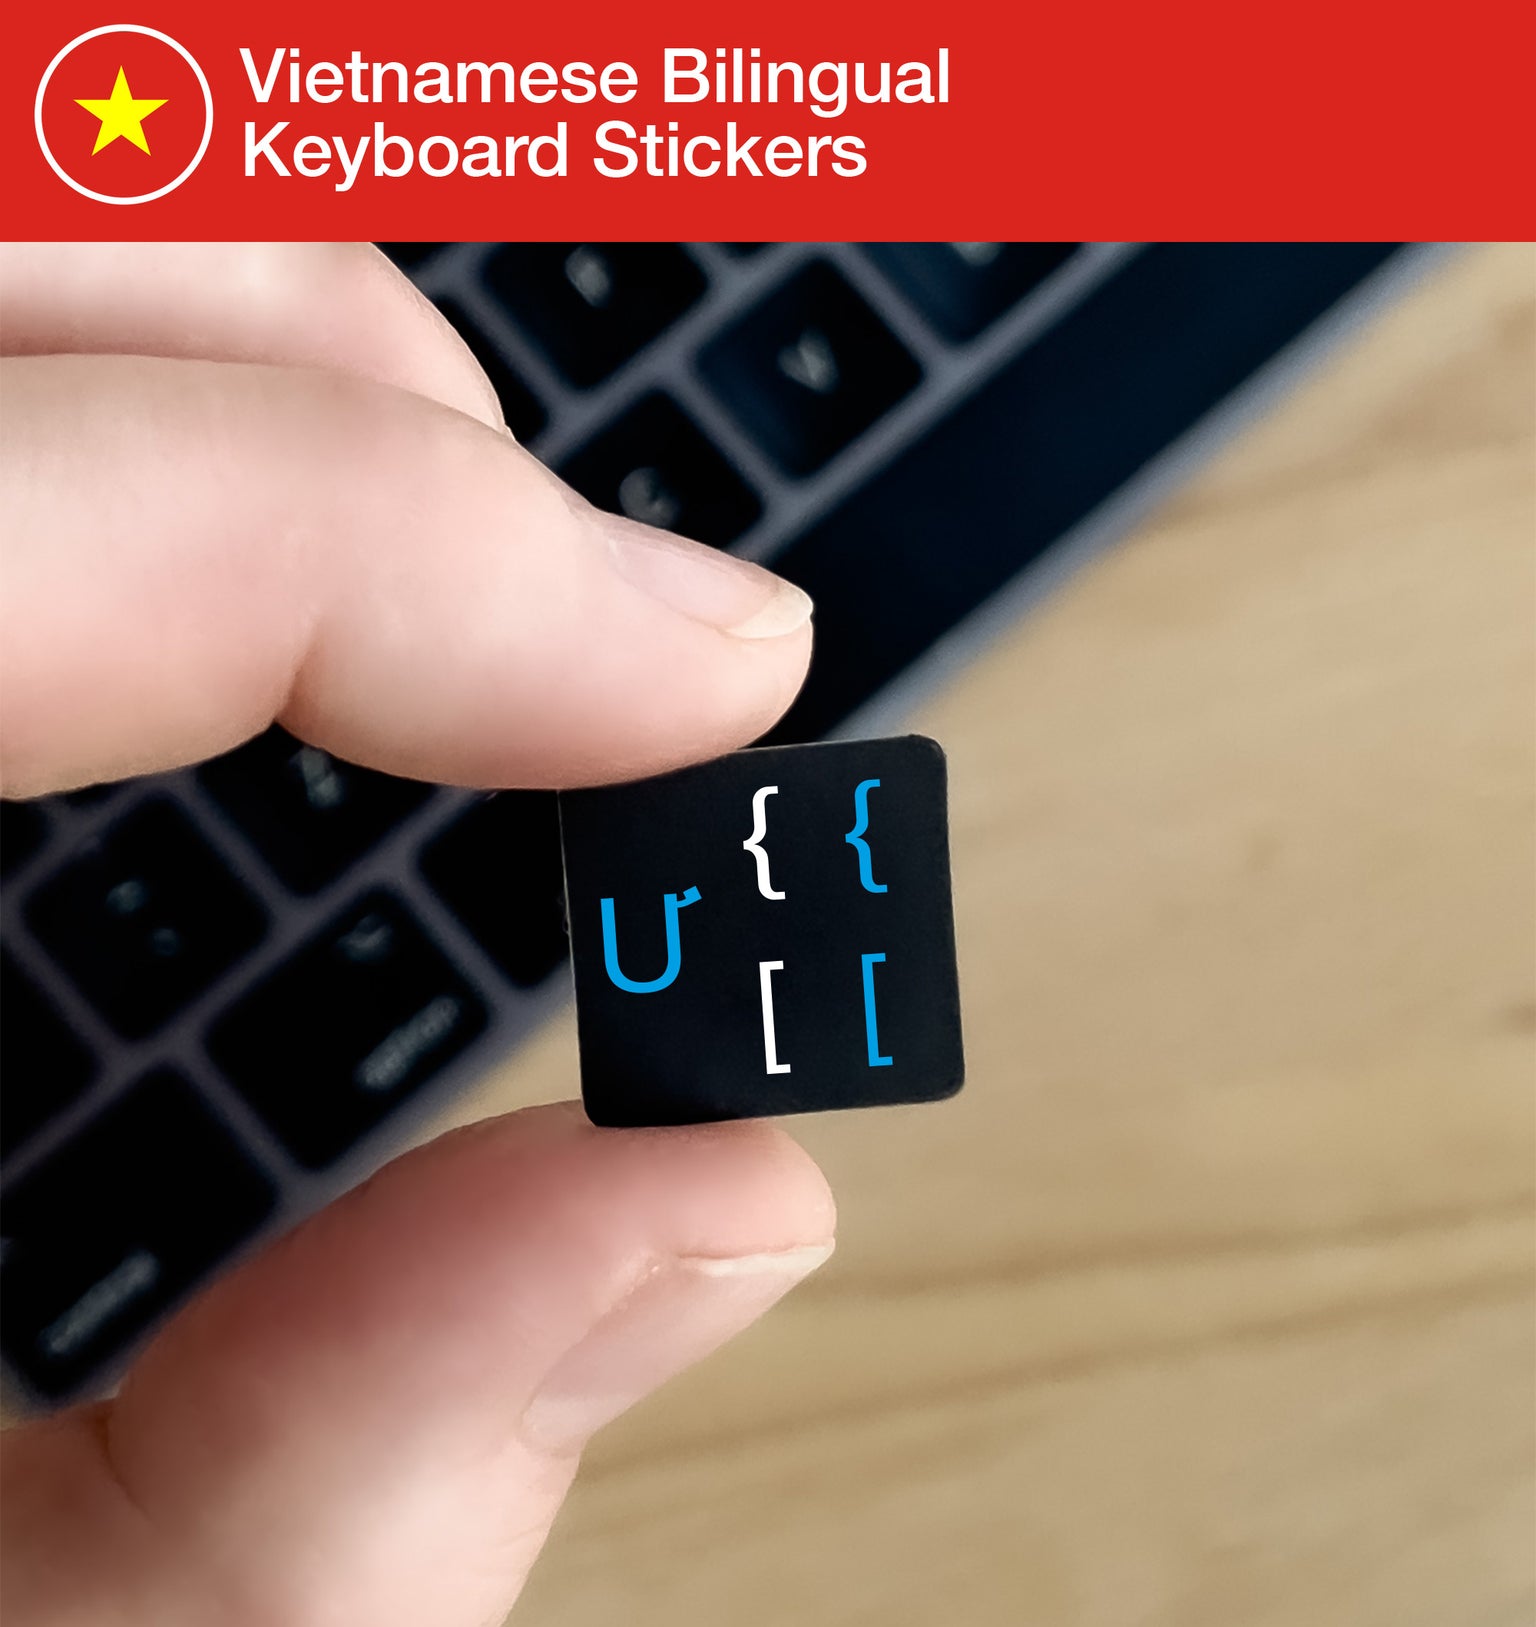 Vietnamese Bilingual Keyboard Stickers with Vietnamese layout